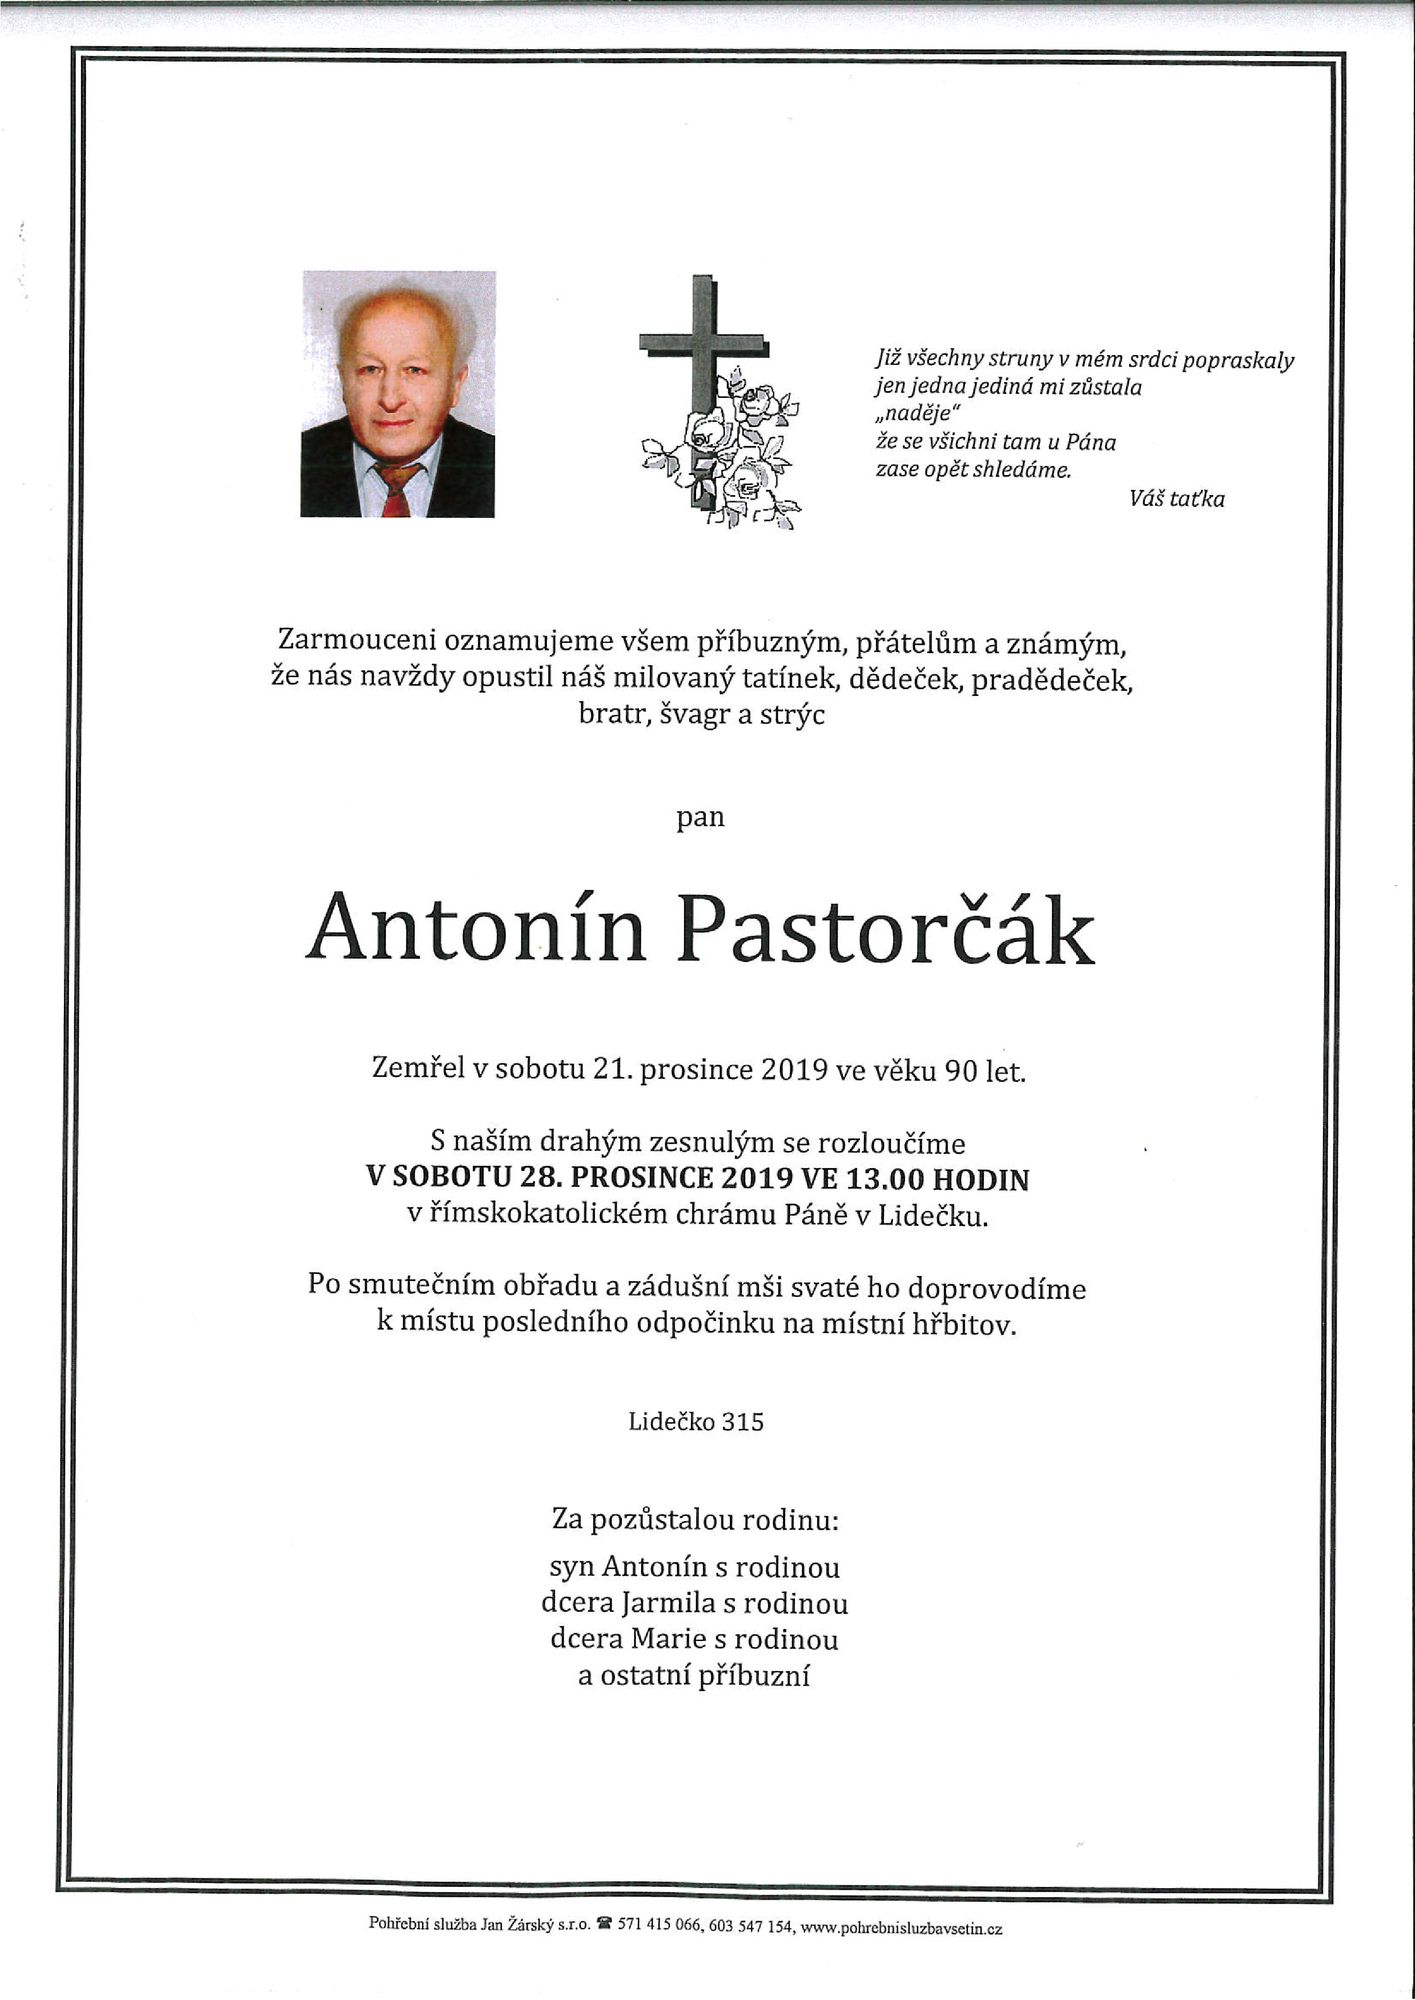 Antonín Pastorčák